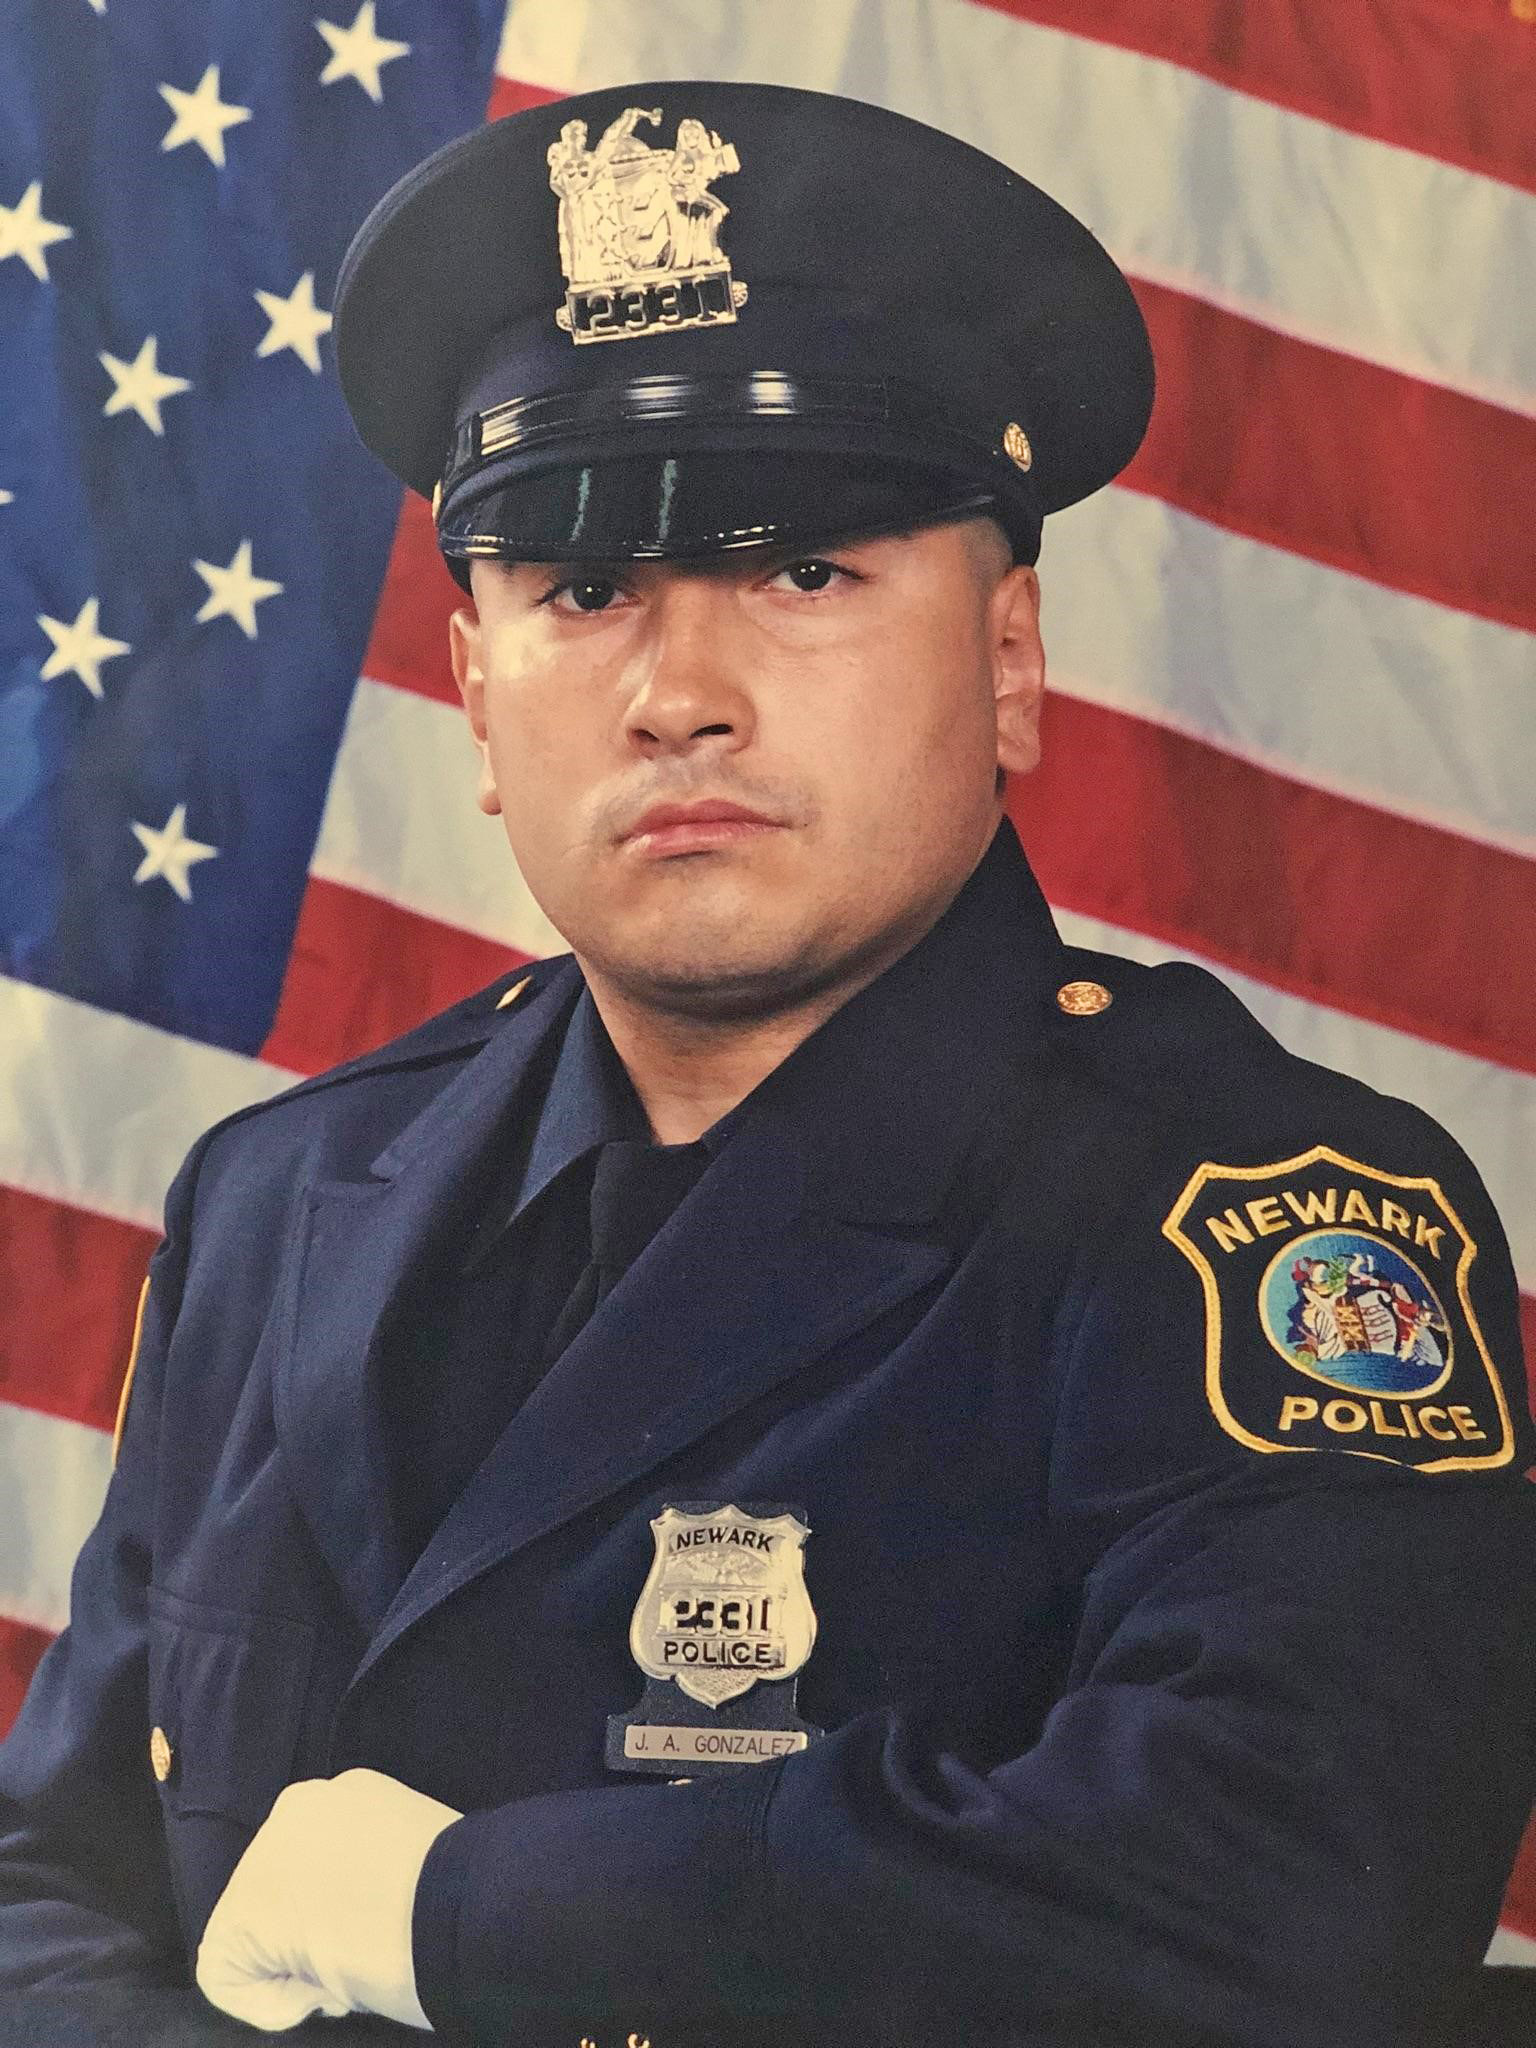 Sergeant Juan Gonzalez